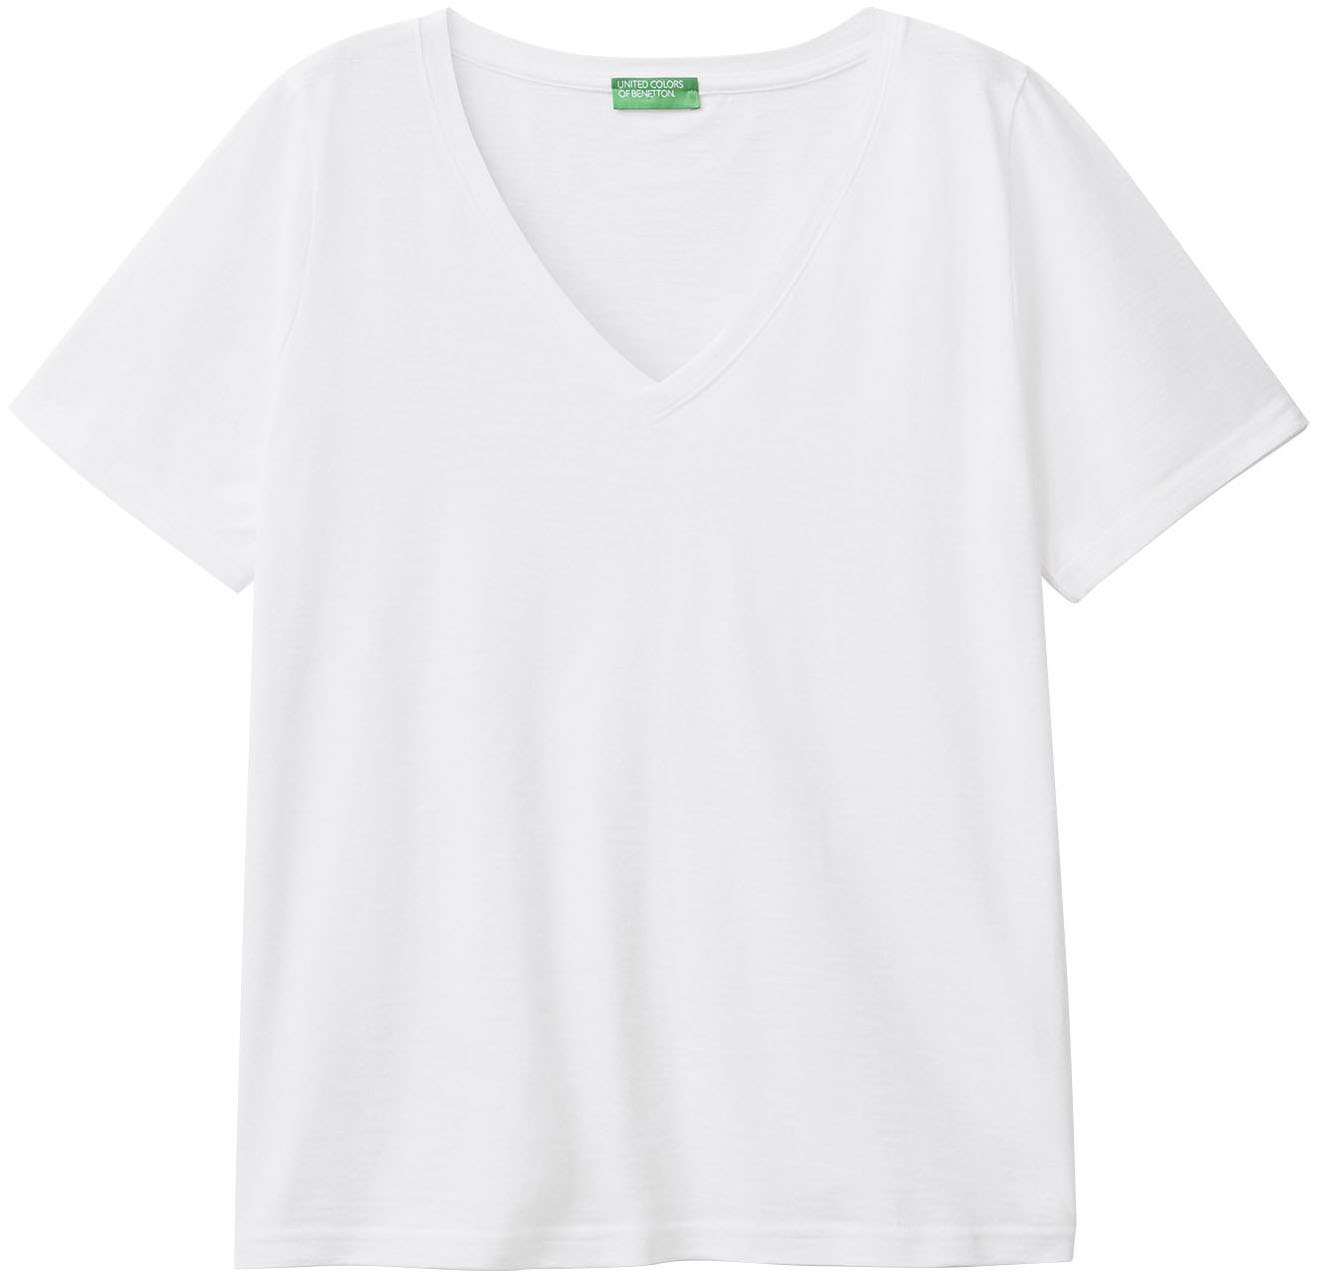 United Colors of online Flammgarnjersey T-Shirt, Benetton aus